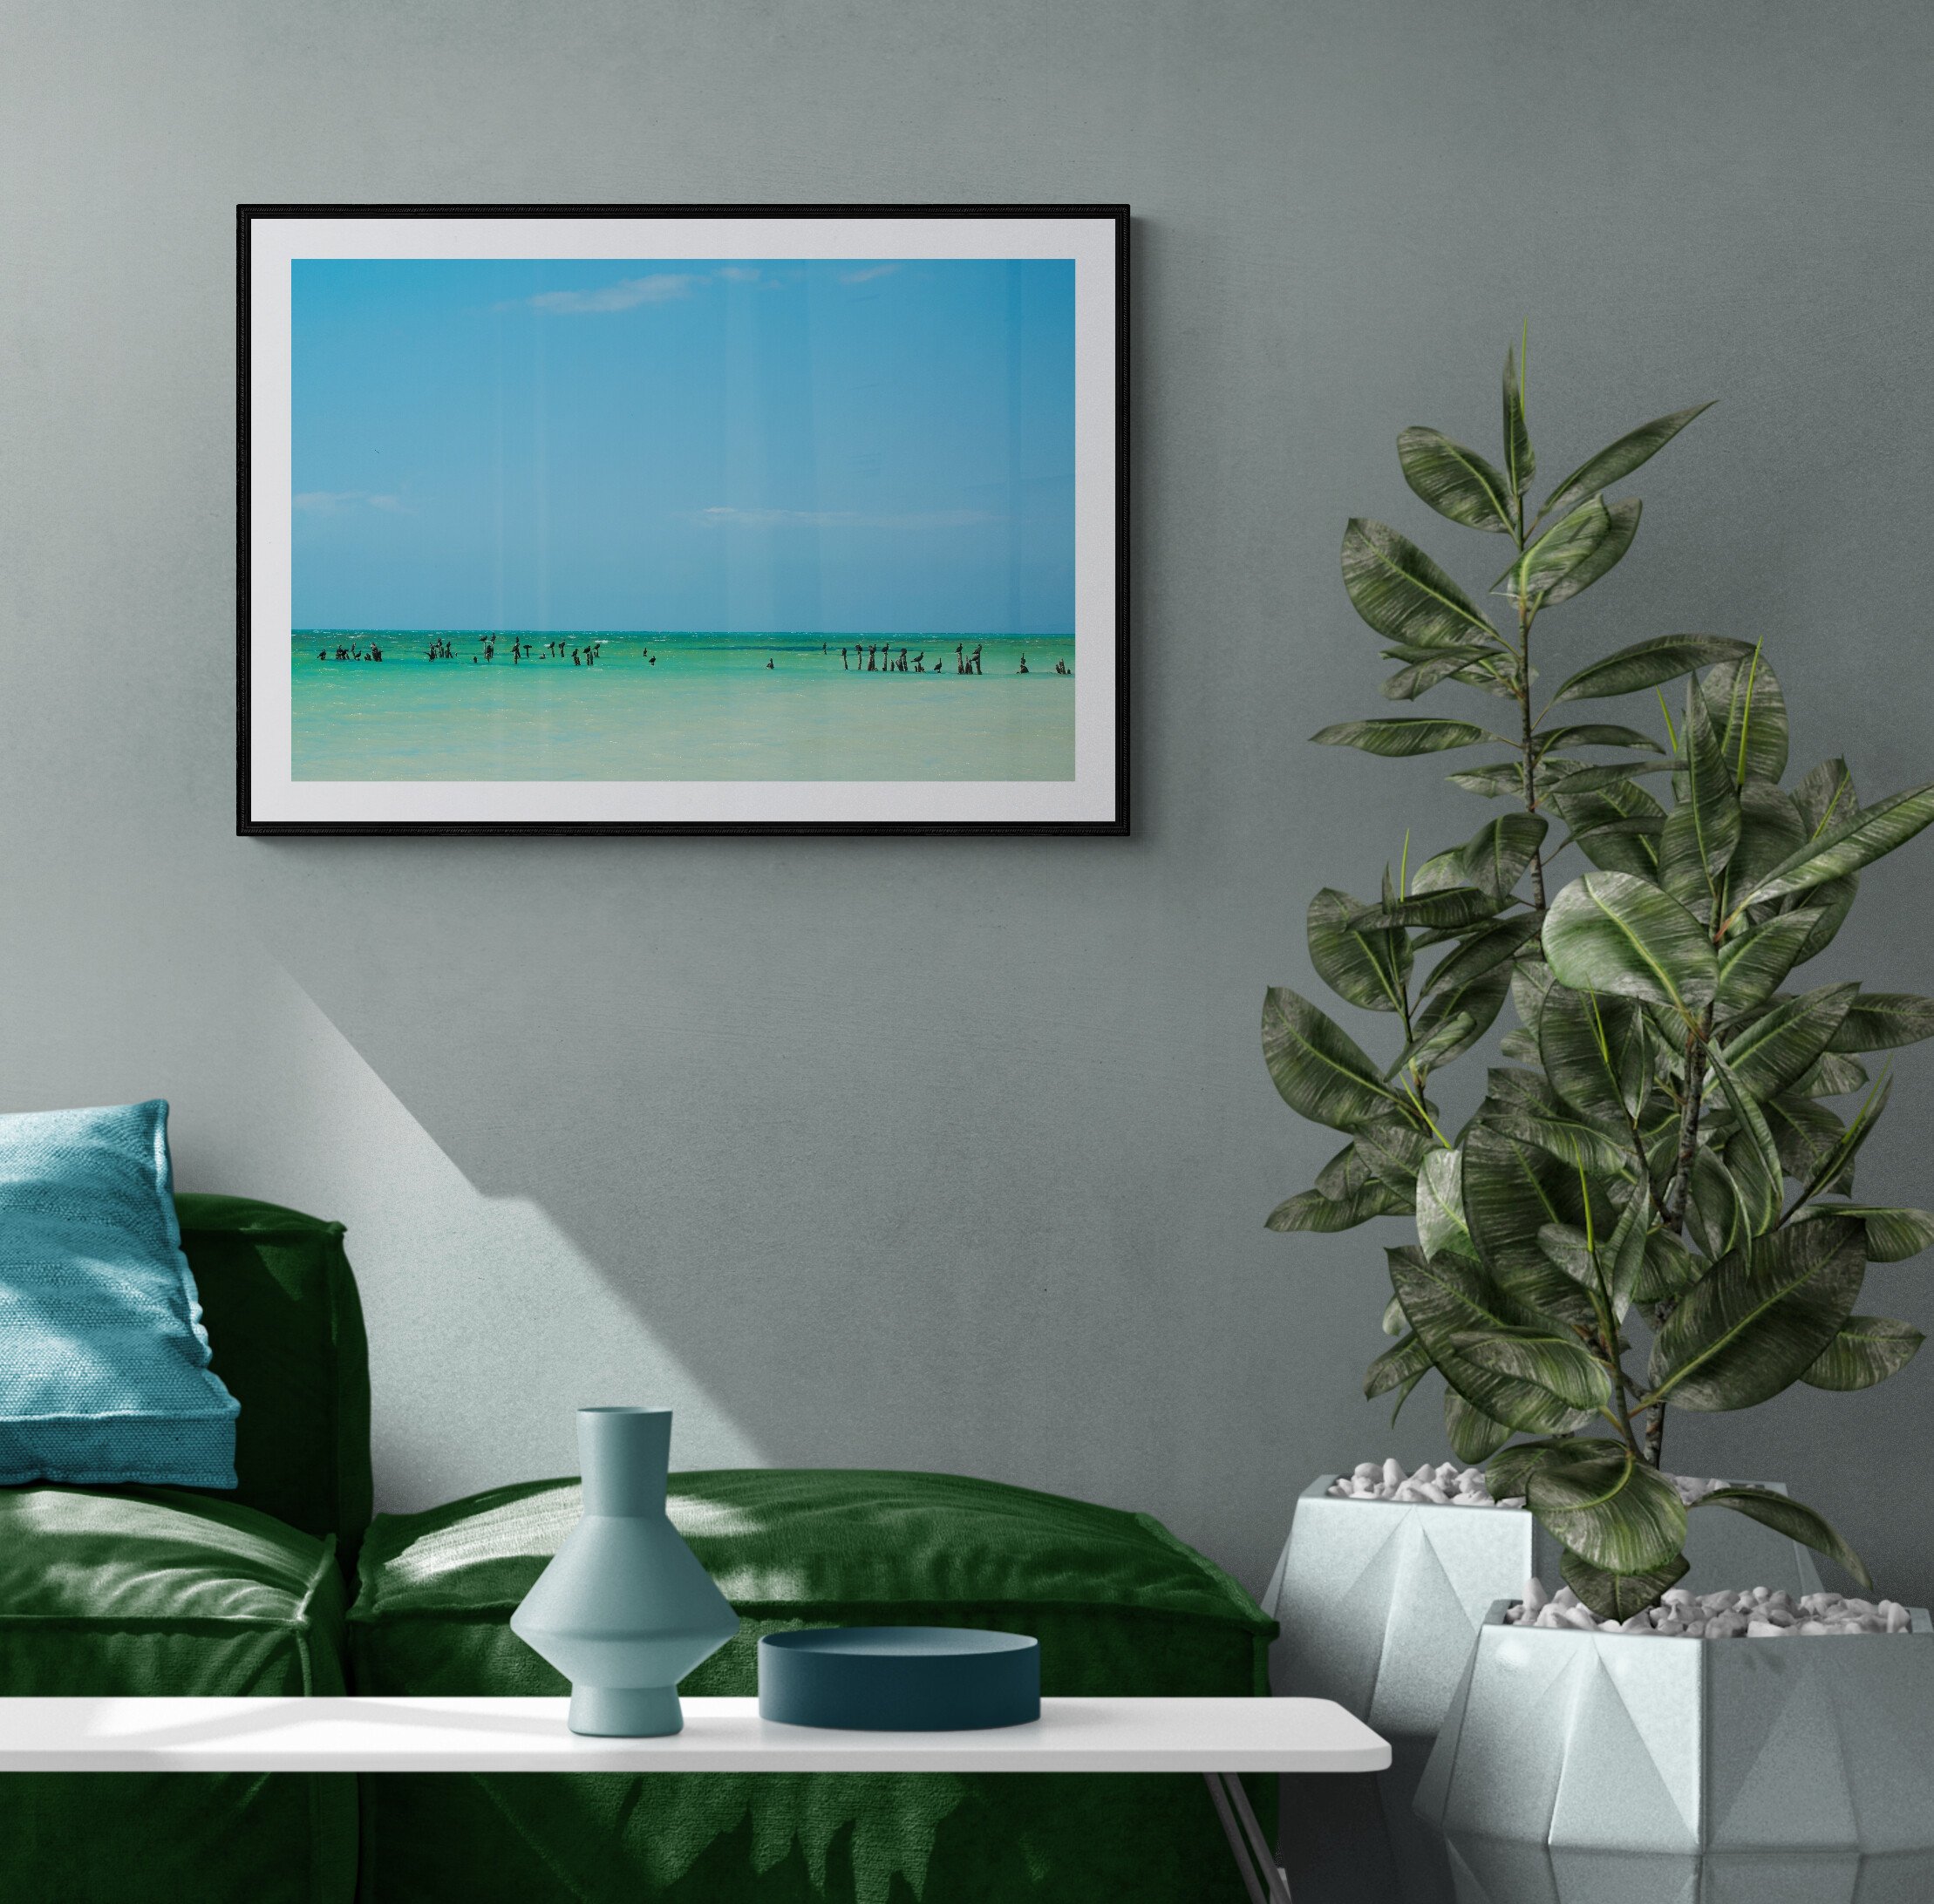 Modern_living_room_with_tropical_plants.jpg